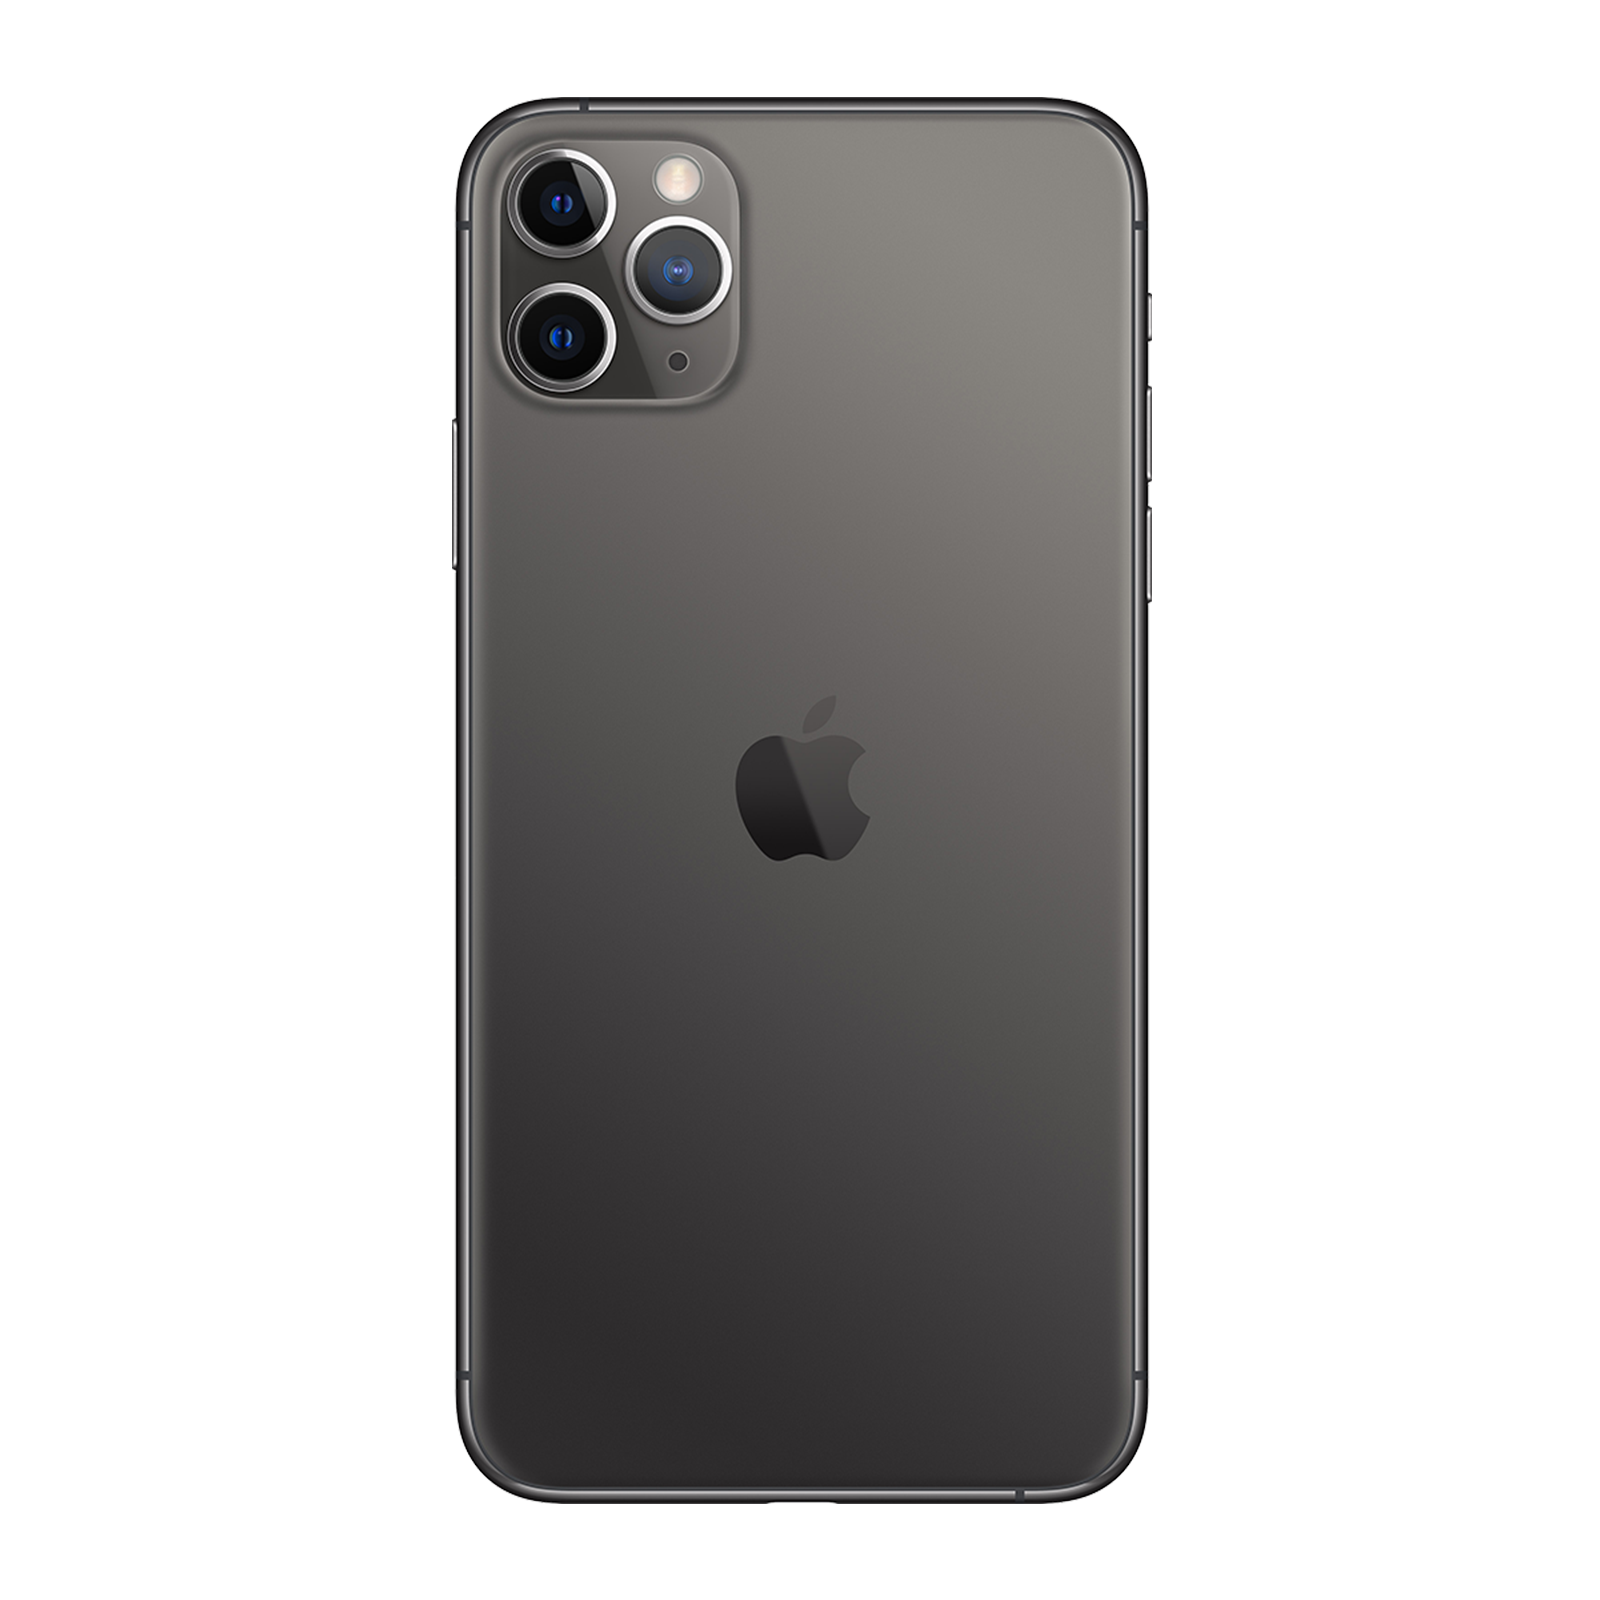 Apple iPhone 11 Pro Max 256GB Space Grey Pristine - Sprint